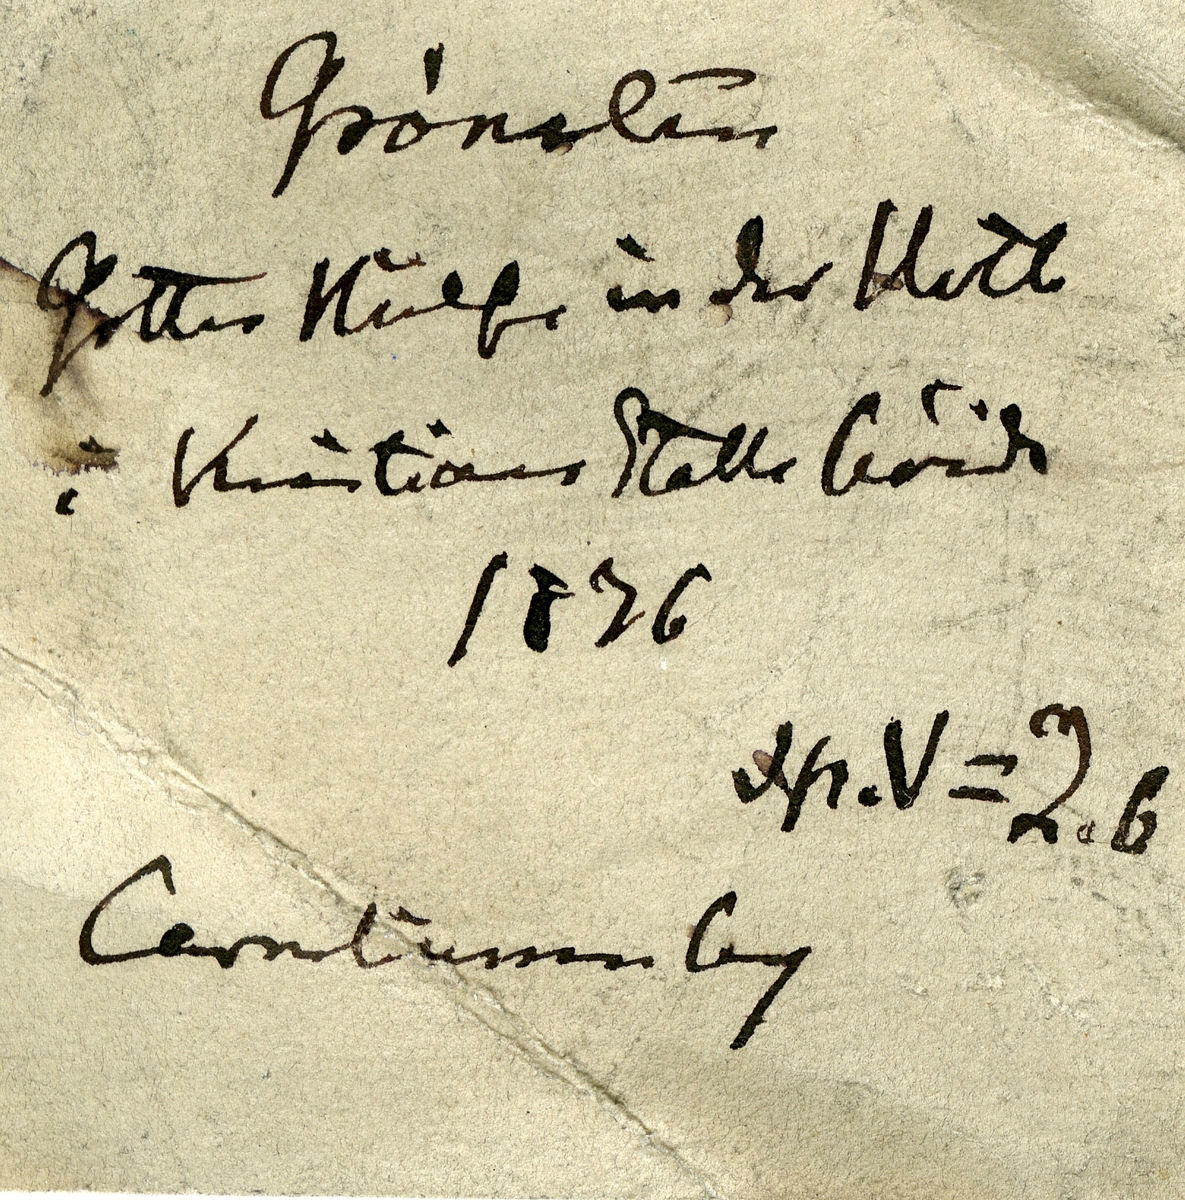 En etikett i eske:
Grønsten
Gottes Hülfe in der Noth 
i Kristians Stolle høide
1876
Sp.V=2.6
Corneliussen leg